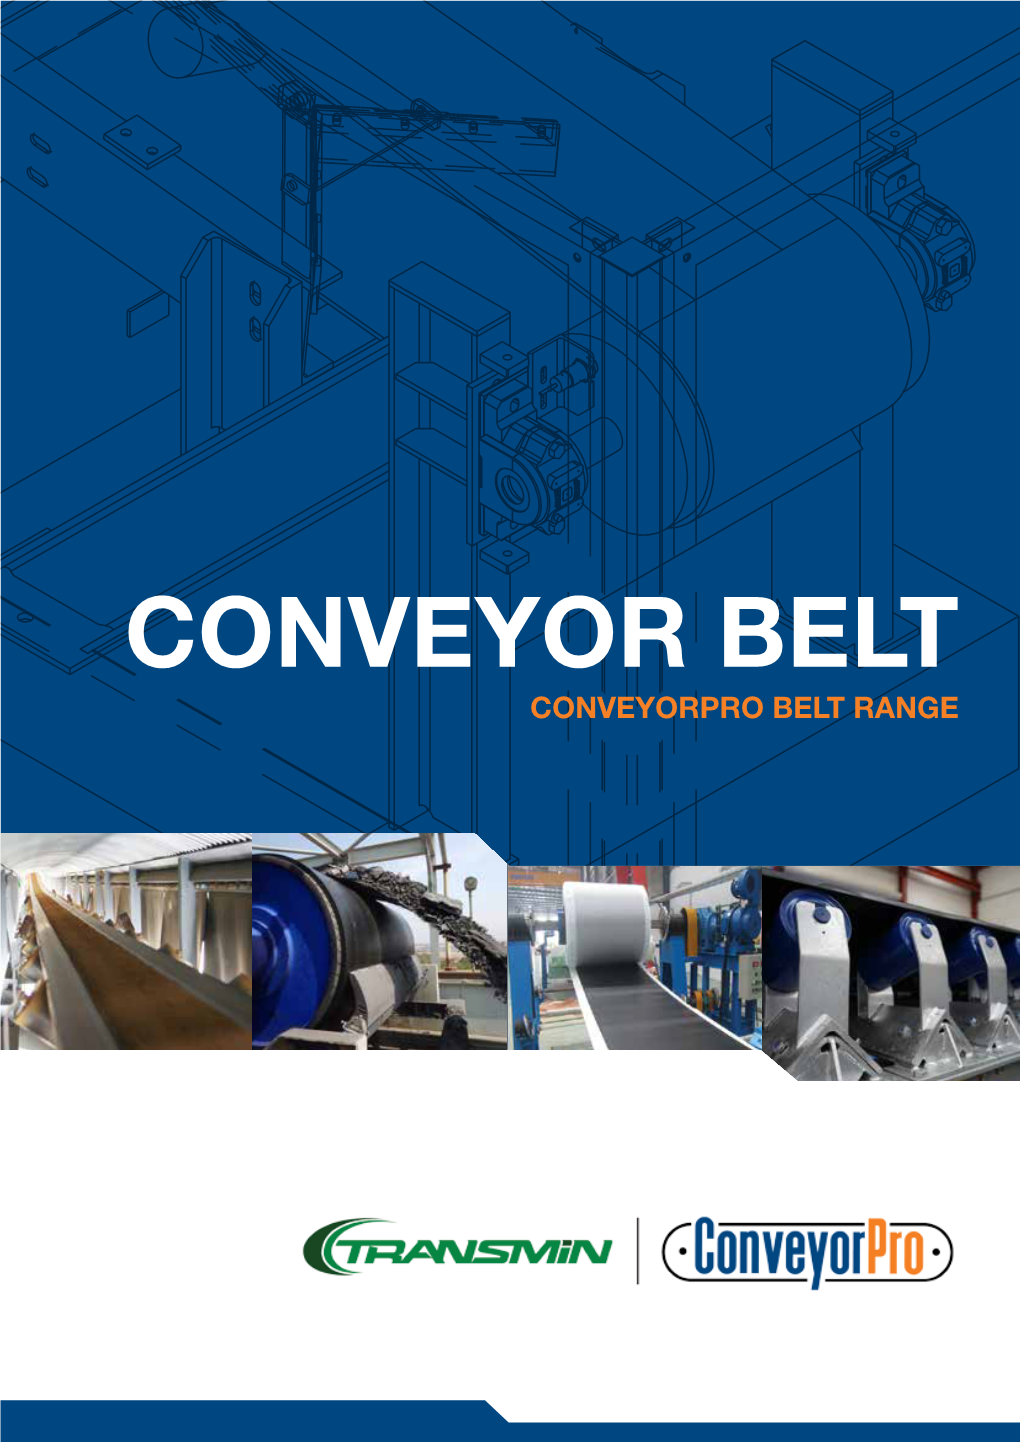 CONVEYOR BELT CONVEYORPRO BELT RANGE the Transmin - Conveyorpro Range Includes Machinery, Equipment, Parts, Servicing and Engineering All Under One Roof